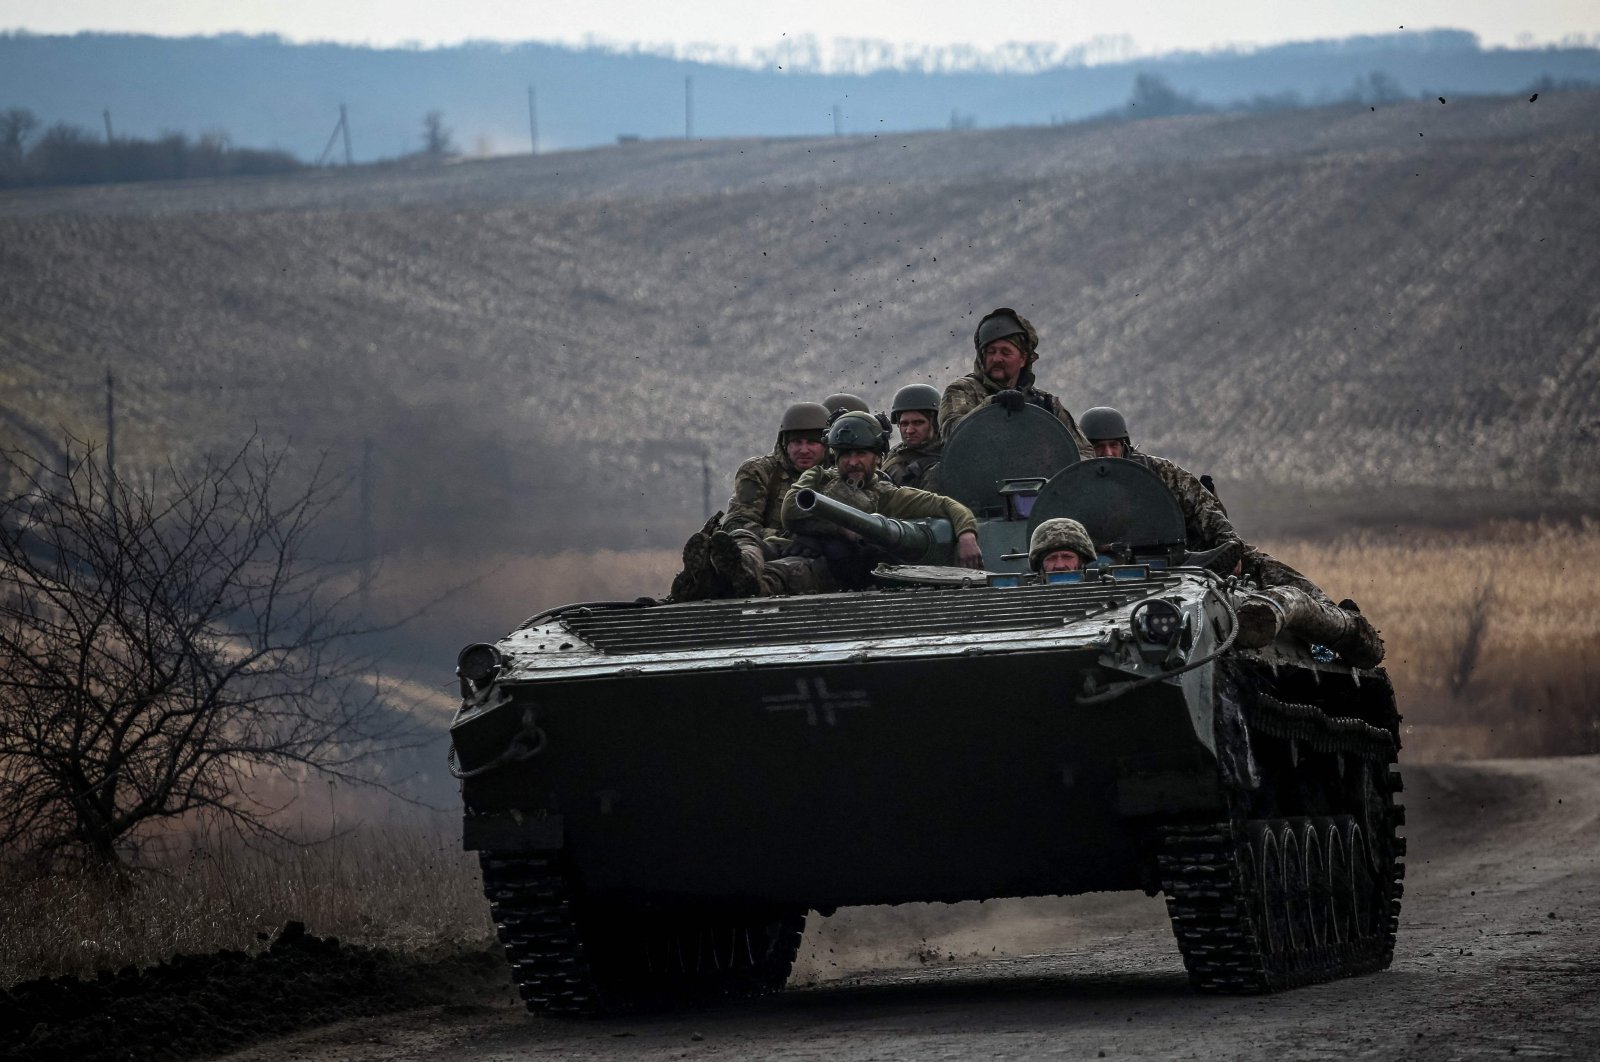 Ukrainian servicemen ride atop a tank near the frontline city of Bakhmut, Ukraine, March 10, 2023. (AFP Photo)